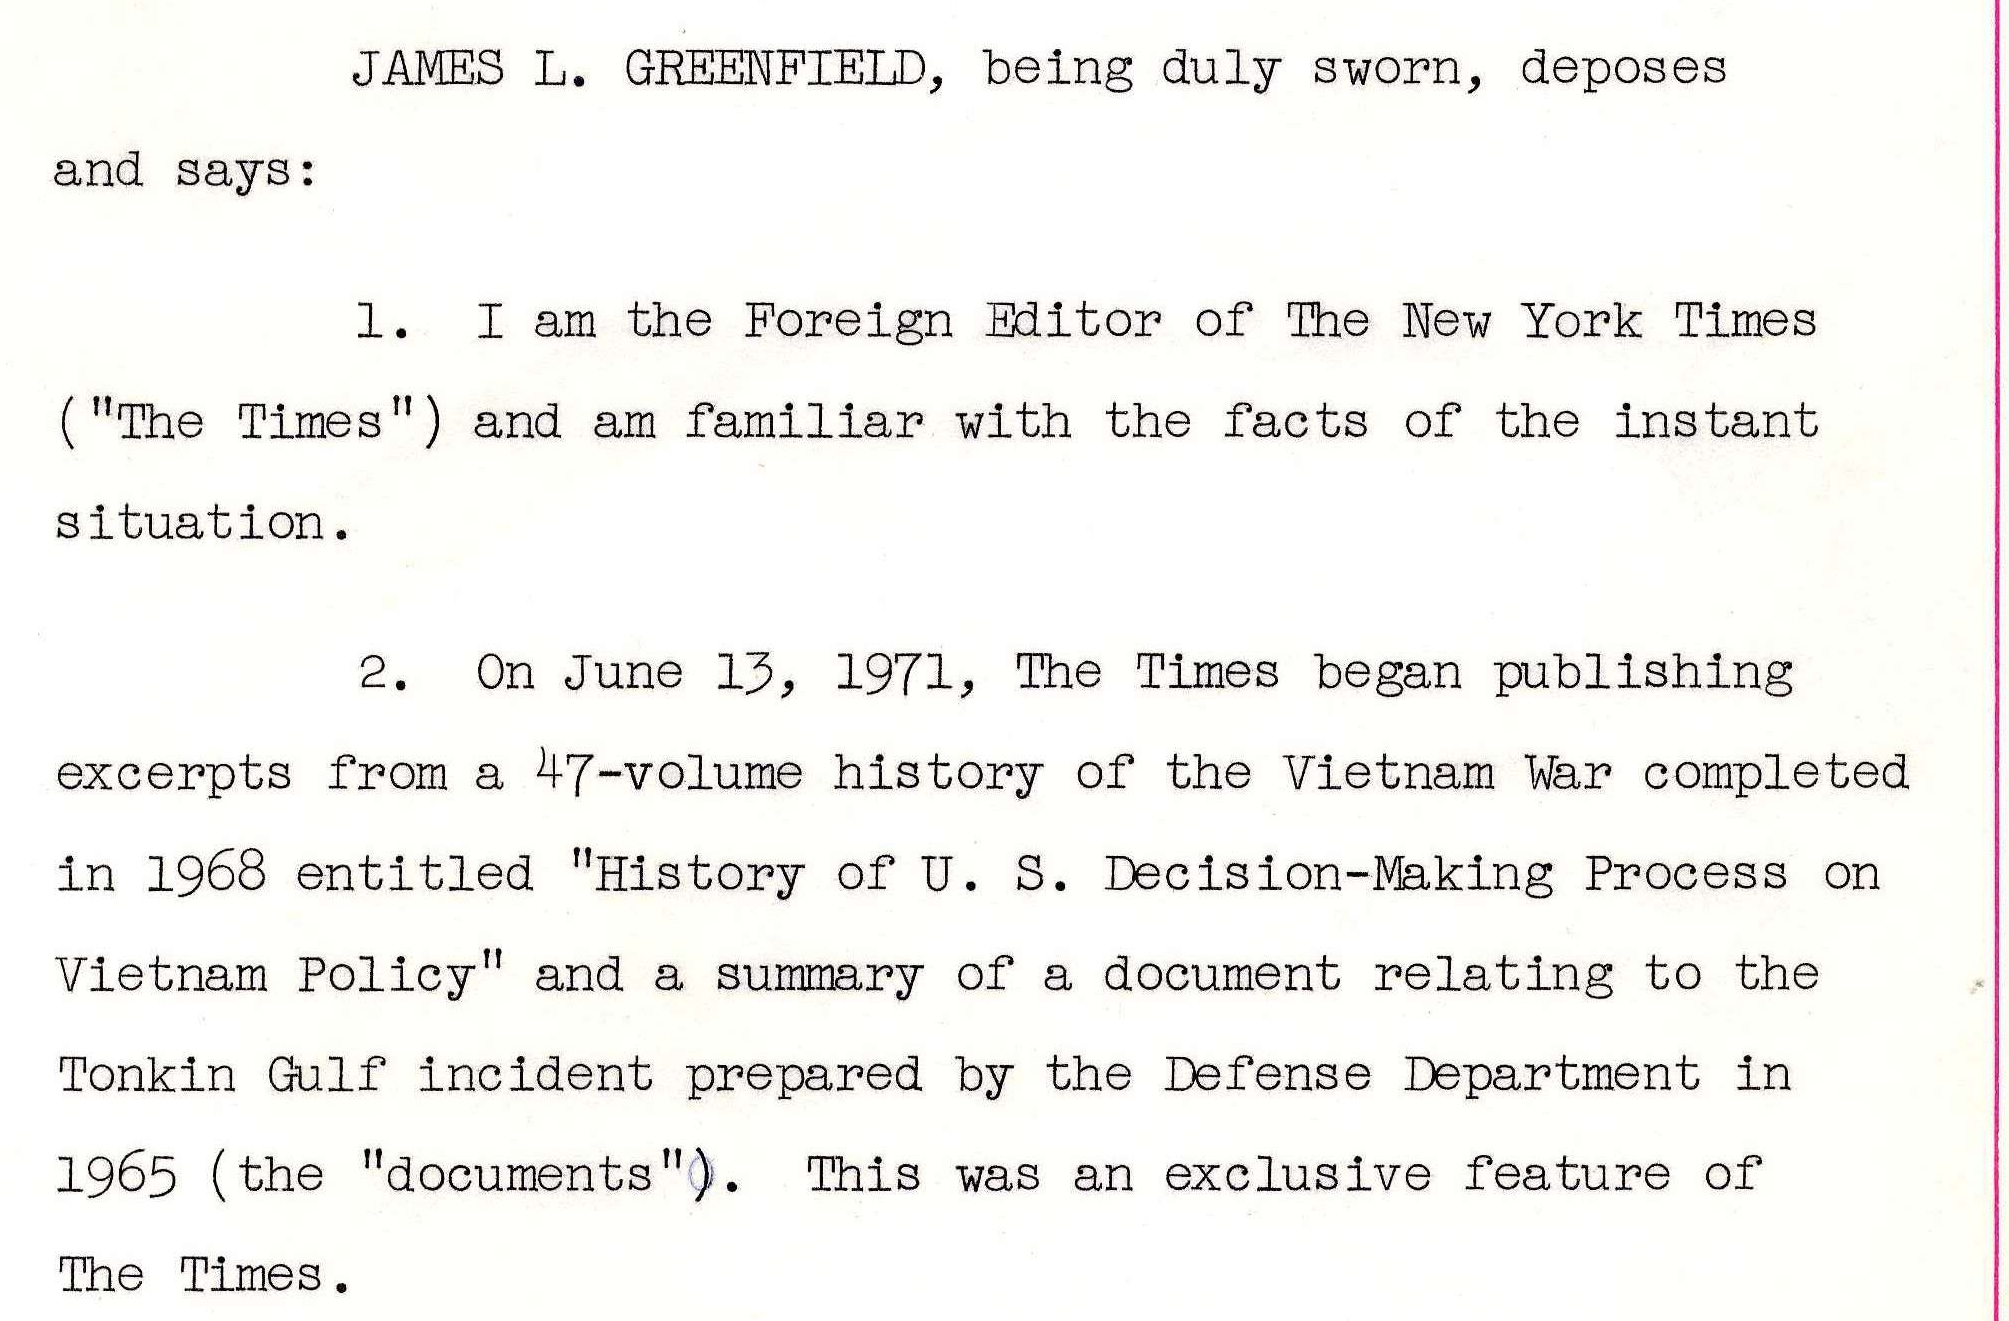 Affidavit of James L. Greenfield